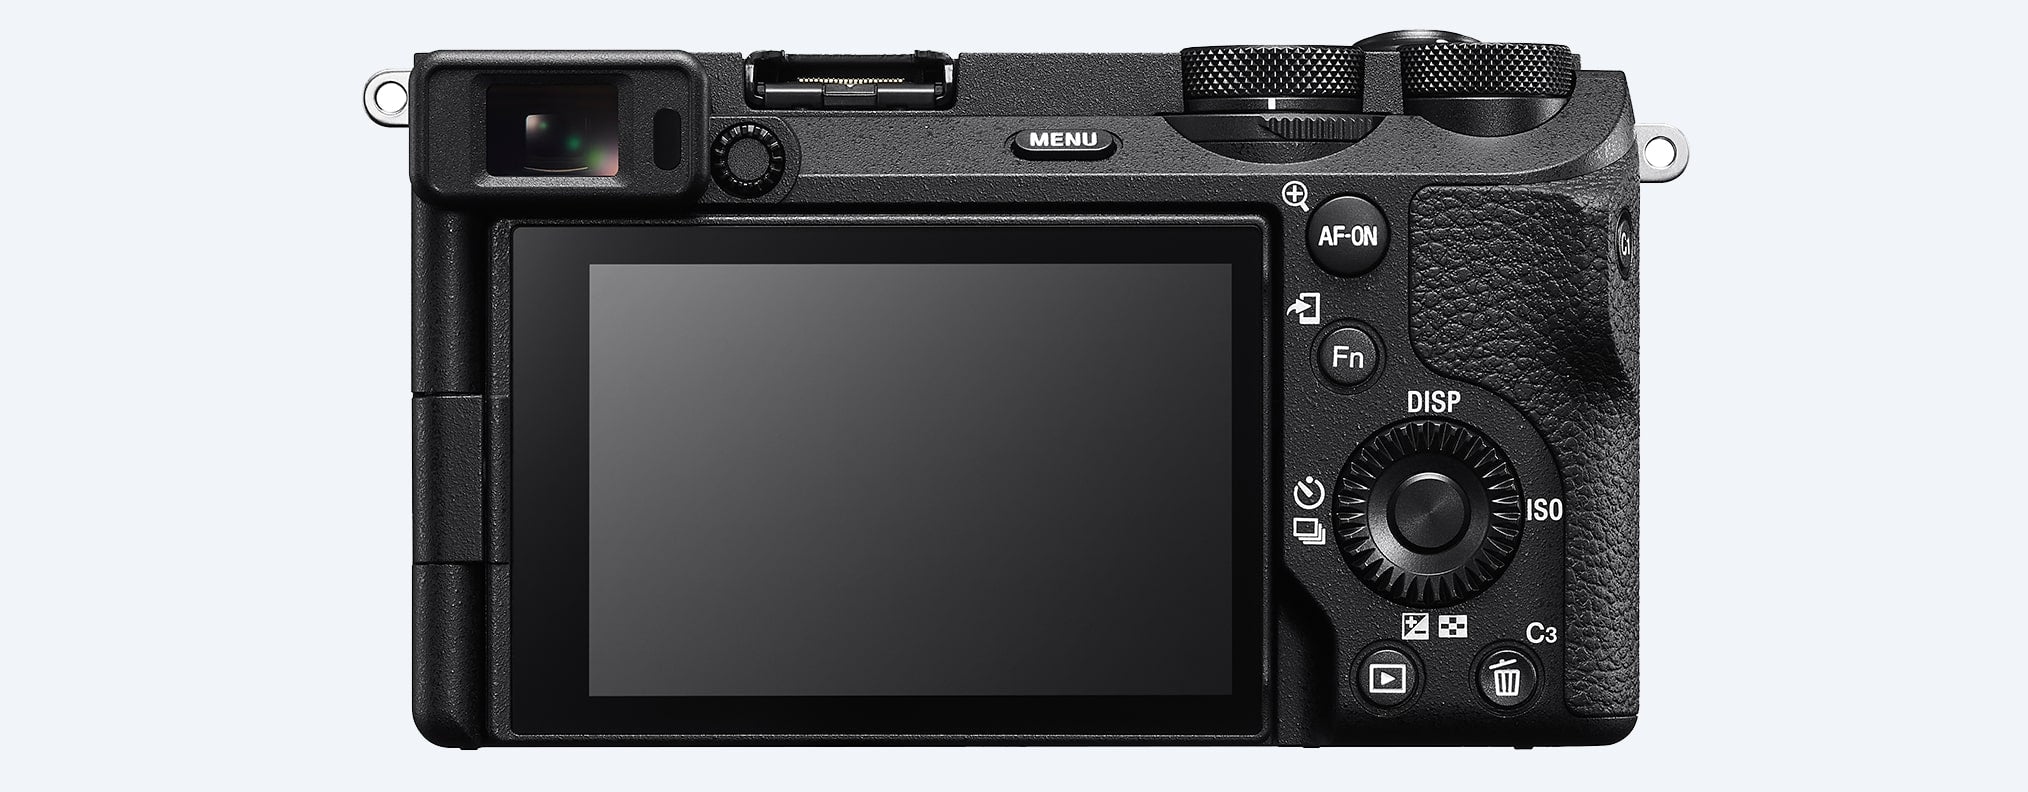 Sony a6700 16-50mm Digital Camera Kit